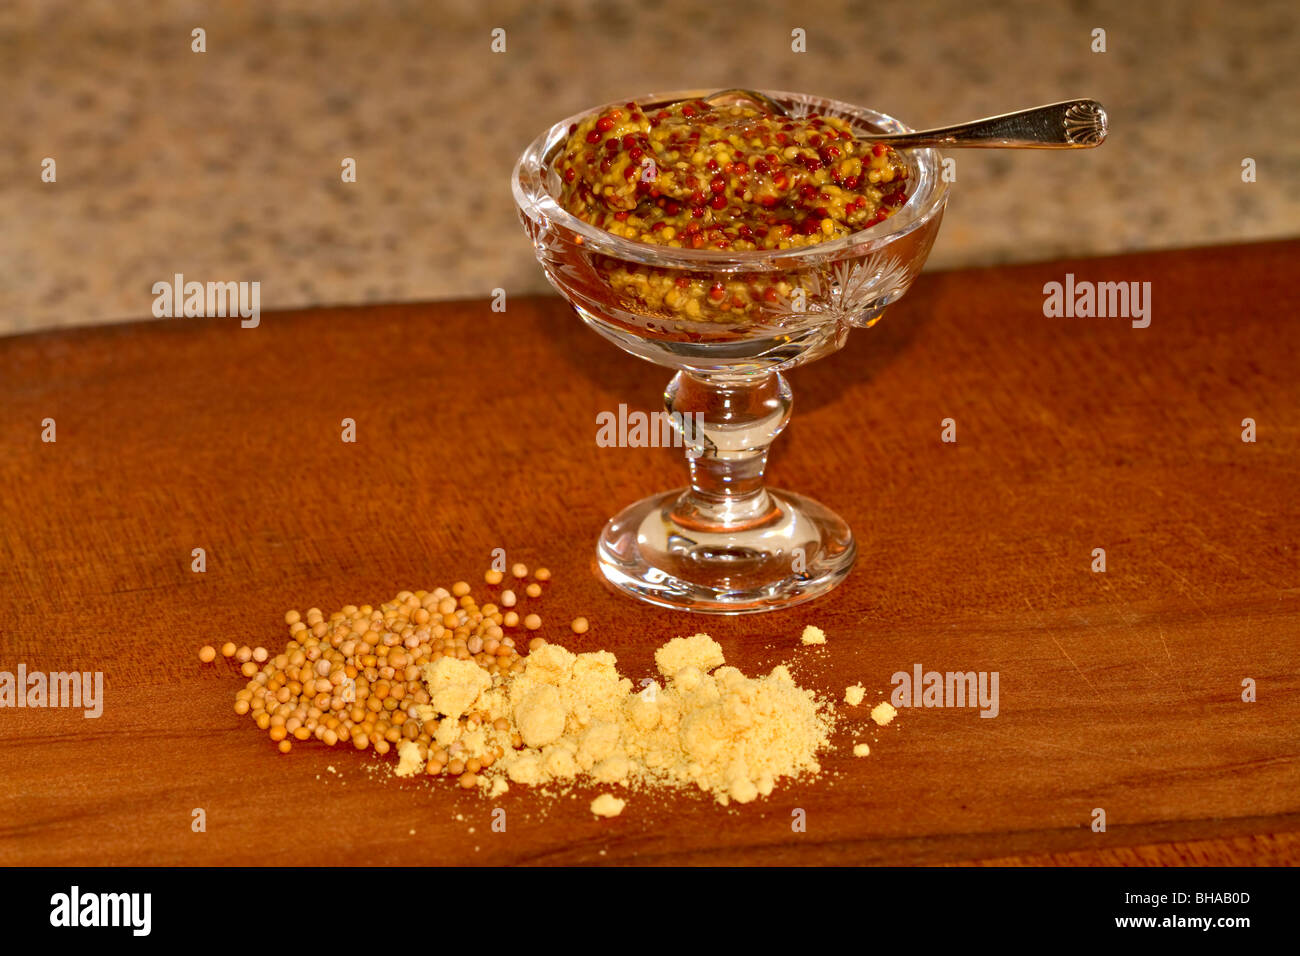 Mustard, prepared whole grain, yellow seeds, and dried powdered hot mustard Stock Photo